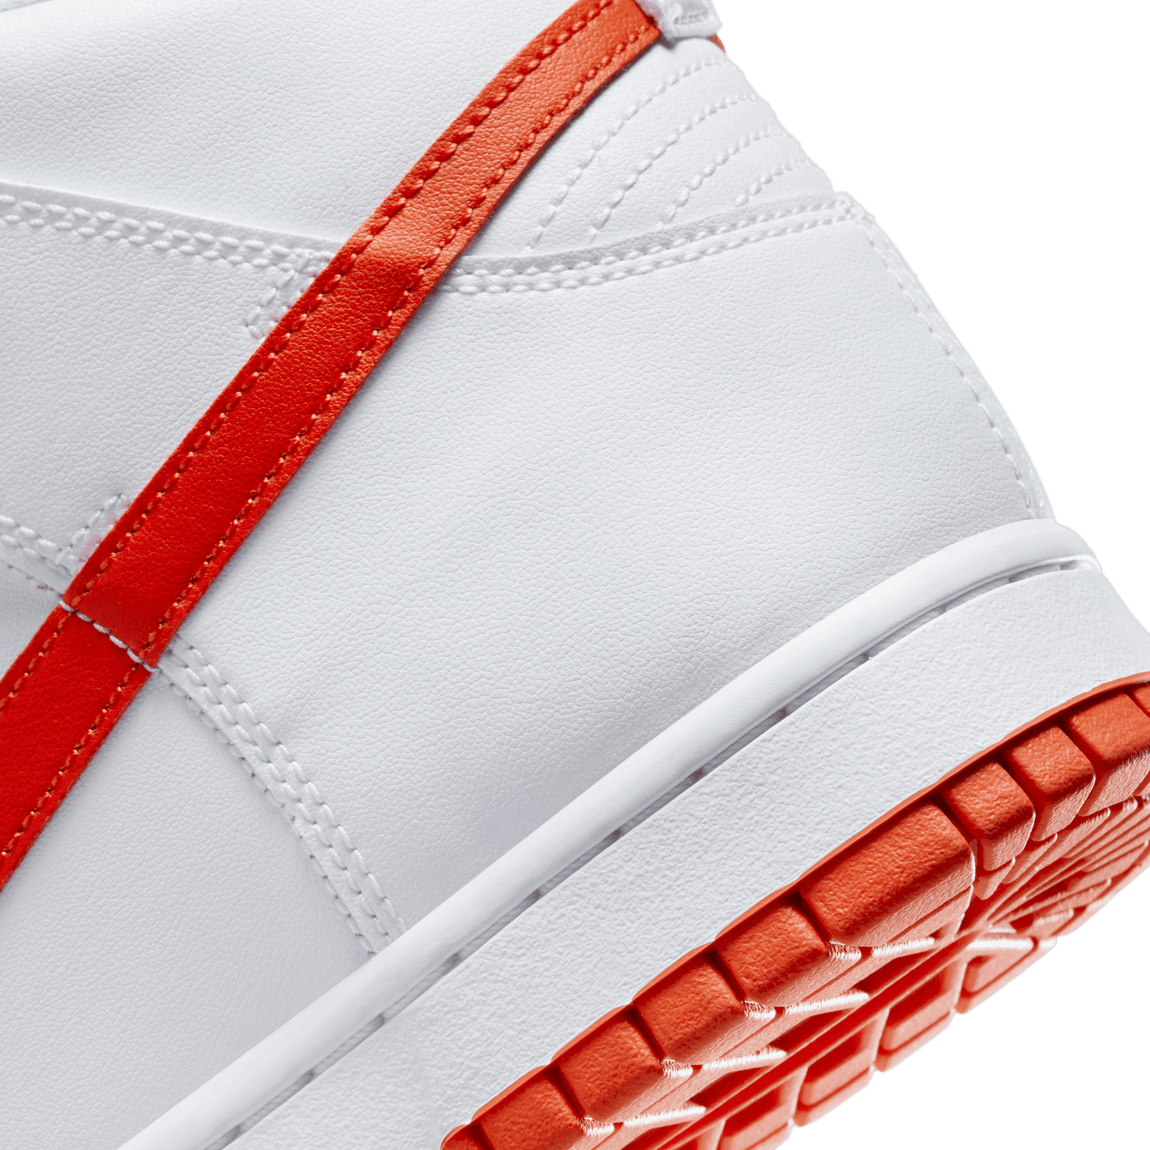 Nike Dunk High Retro (White/Picante Red-White) - Nike Dunk High Retro (White/Picante Red-White) - 